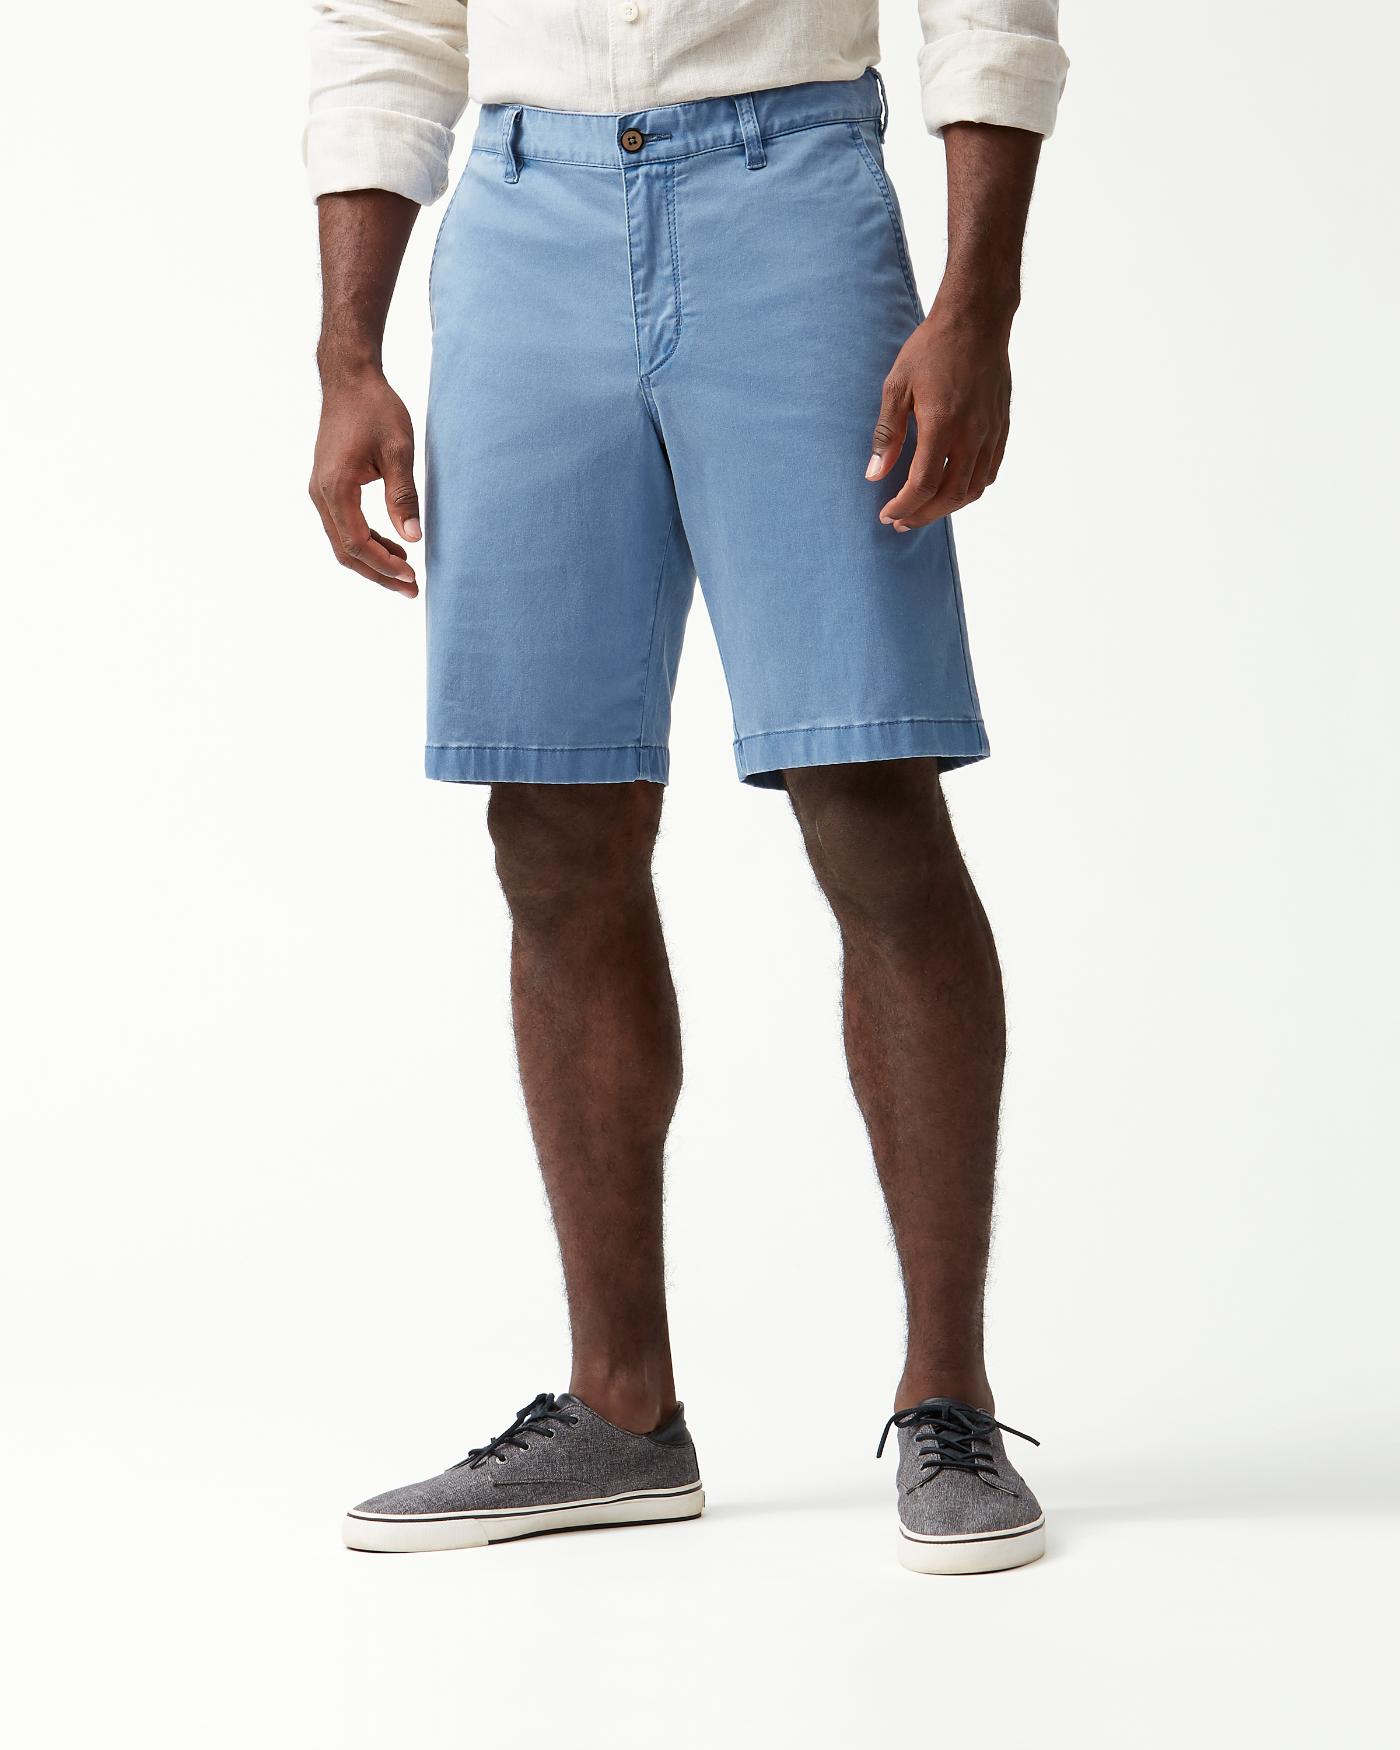 Tommy Bahama Boracay Shorts PORT SIDE BLUE 32  